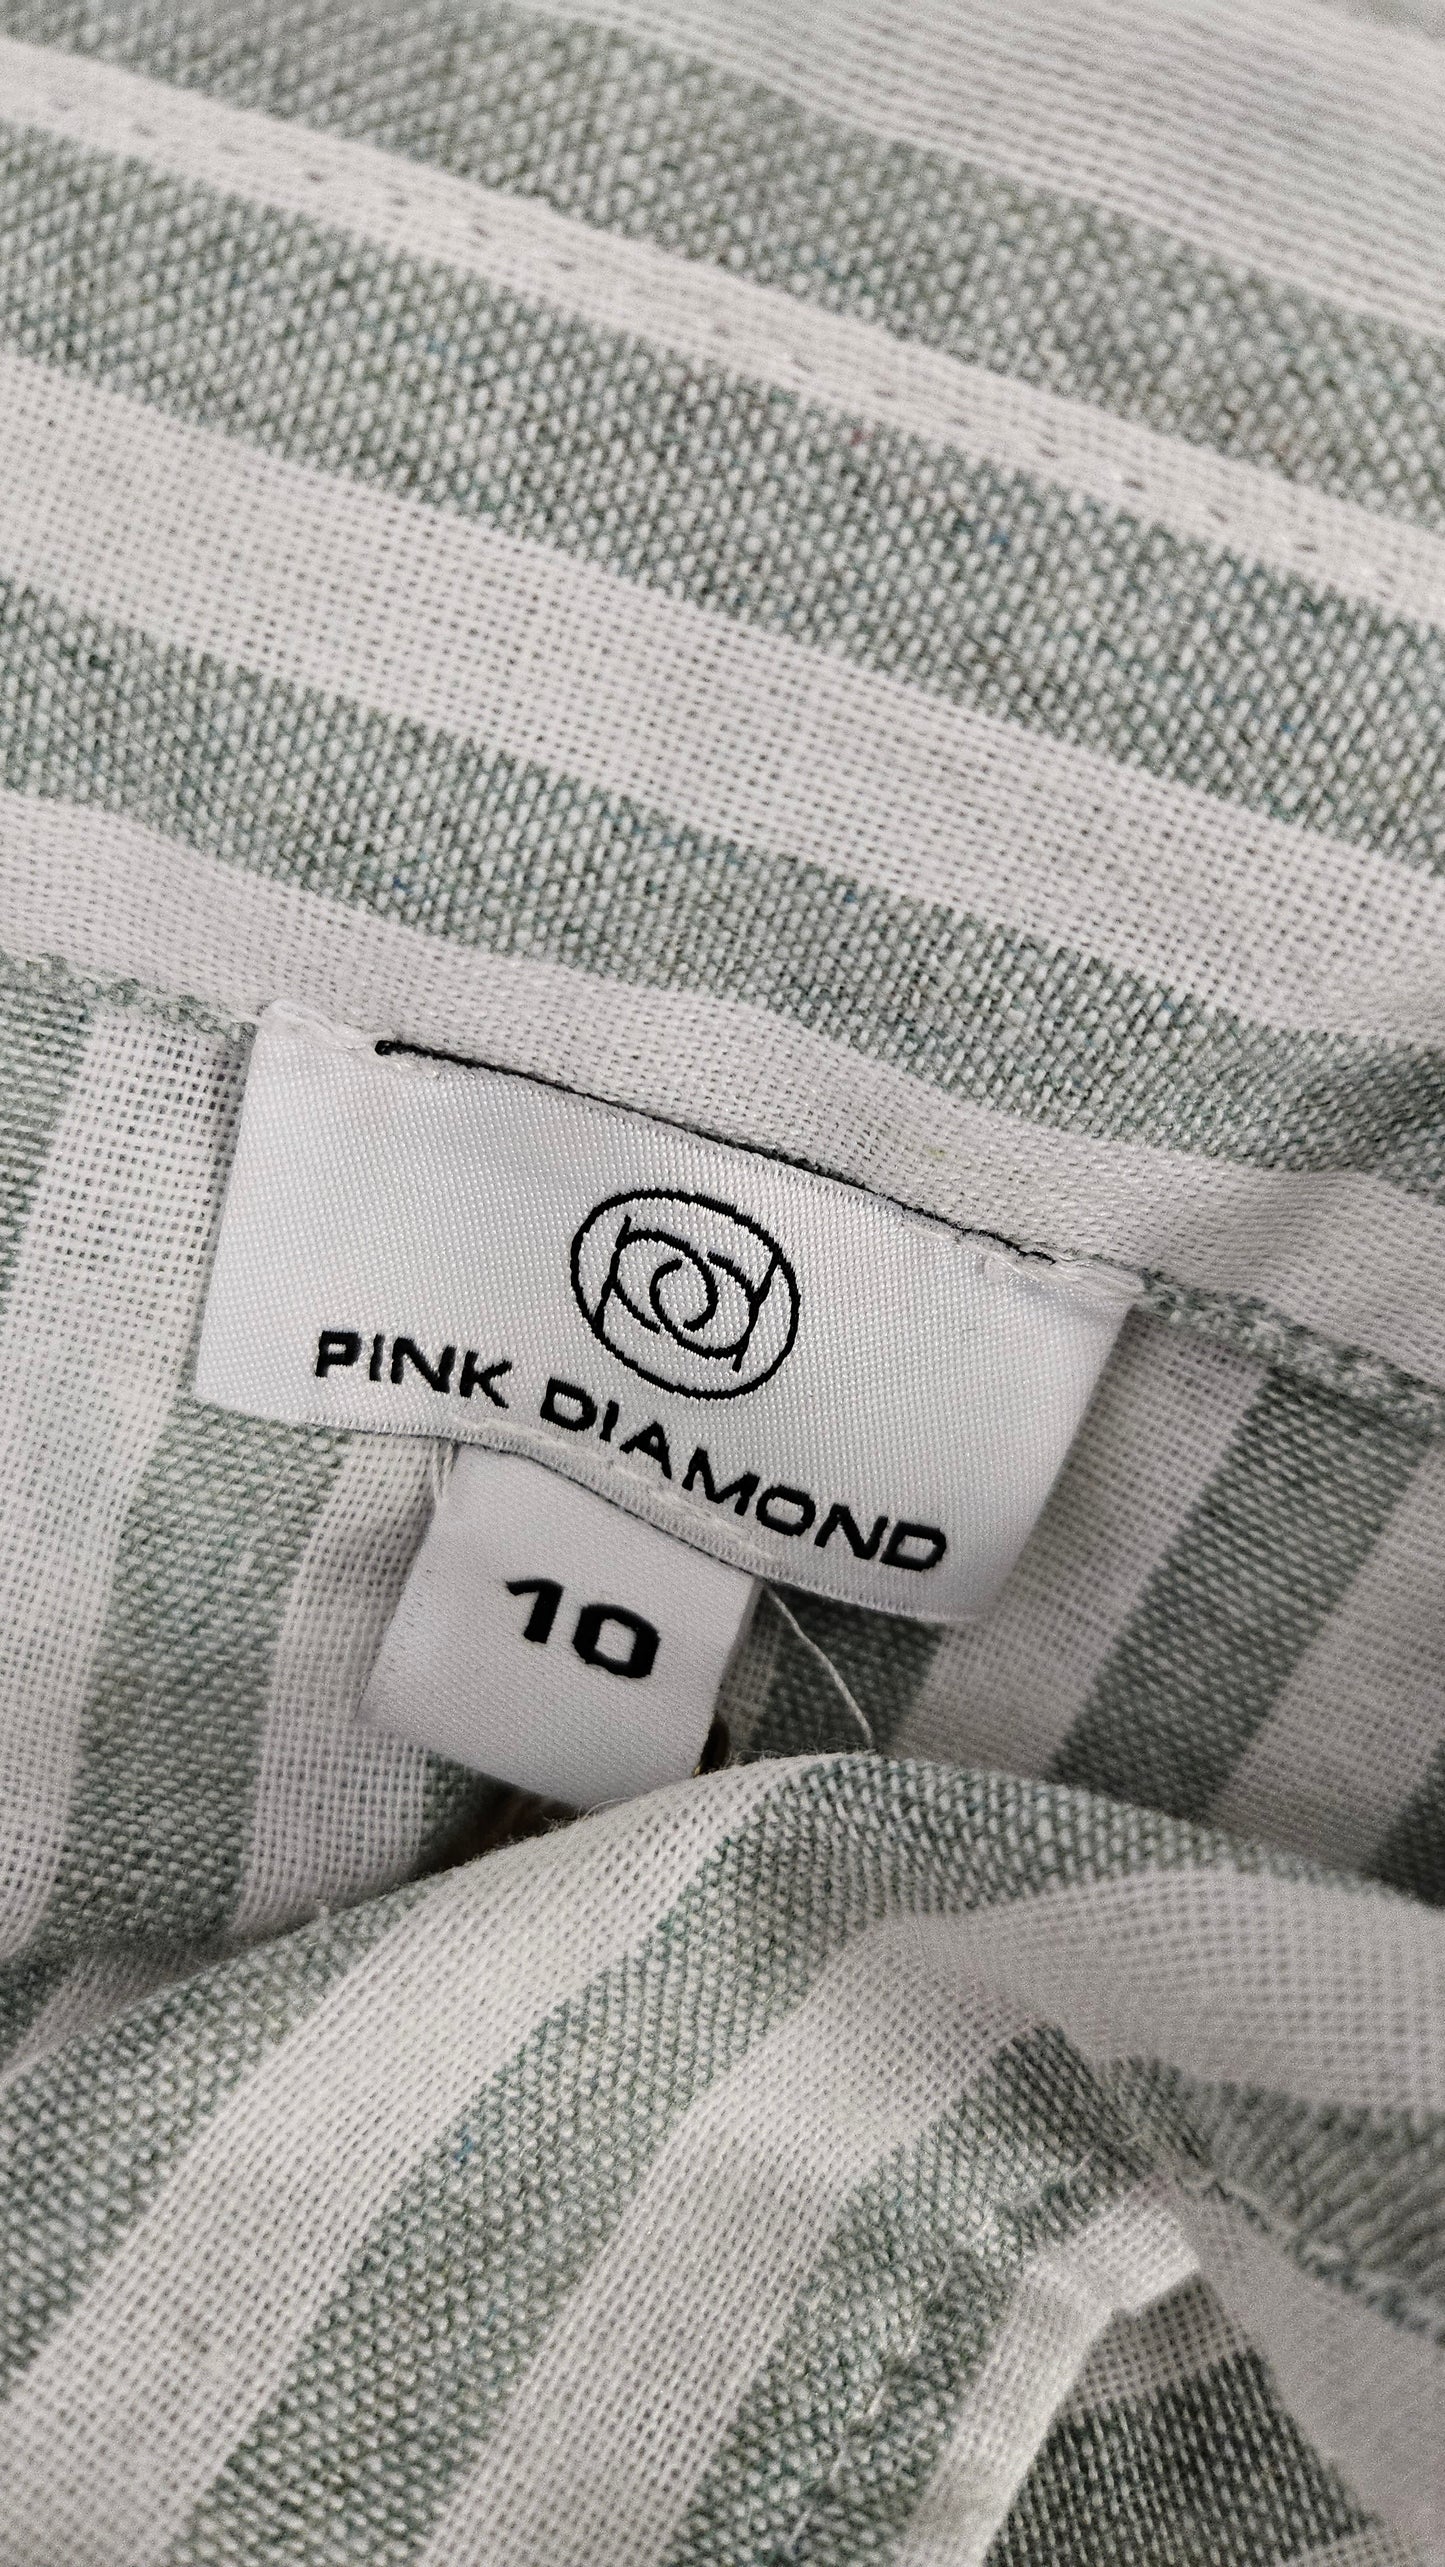 Pink Diamond Multi Striped Shirt (10)